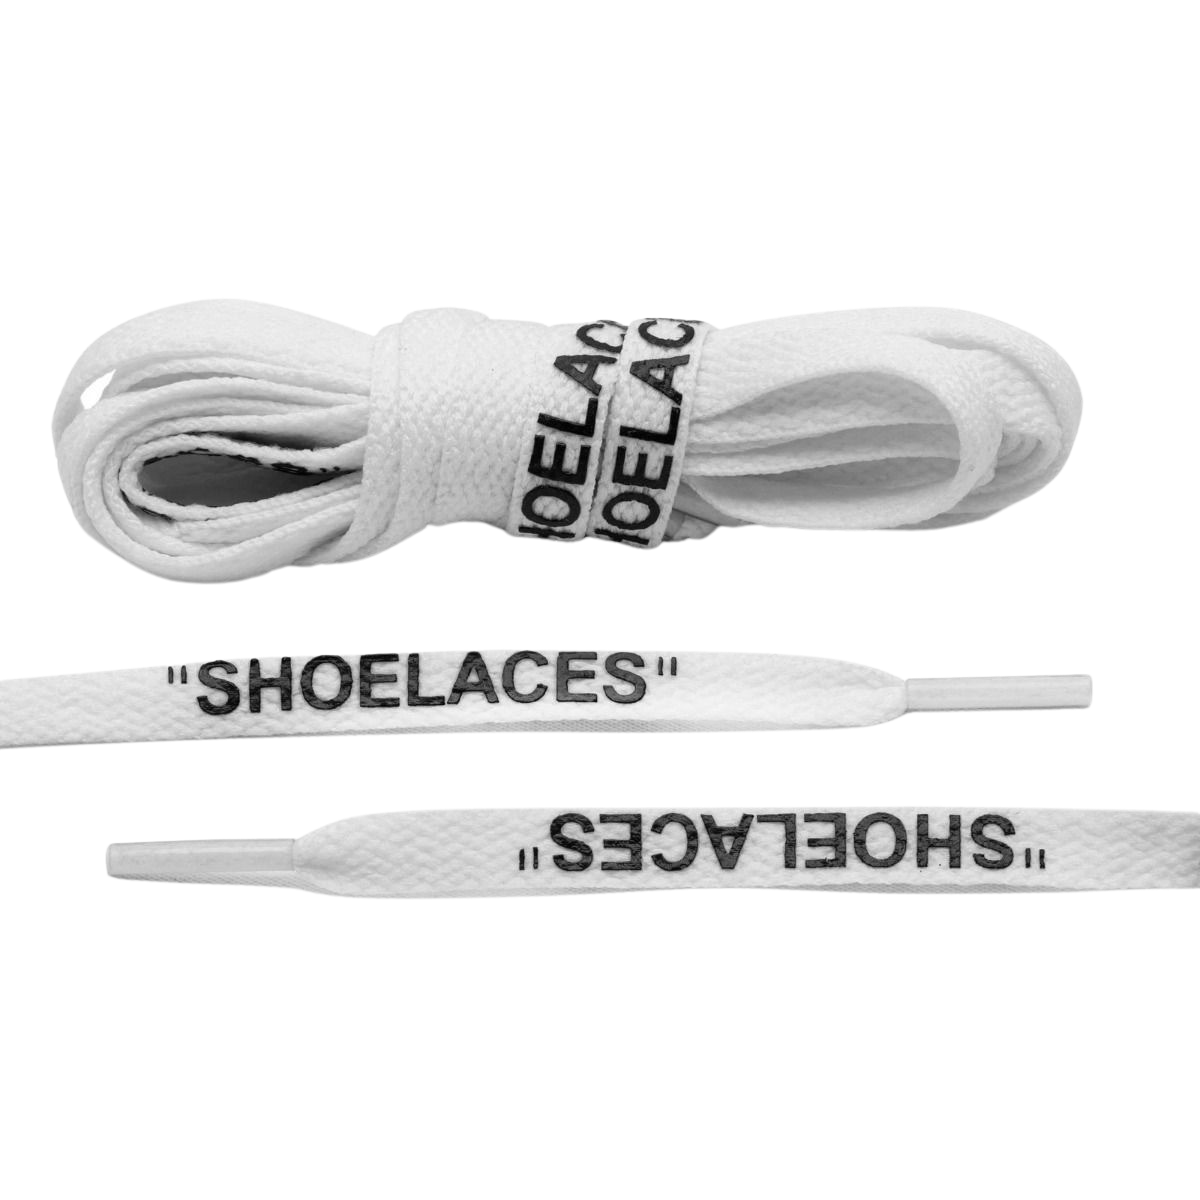 Off White ”SHOELACES” - bijele plosnate vezice Vezice | Shoecleanique